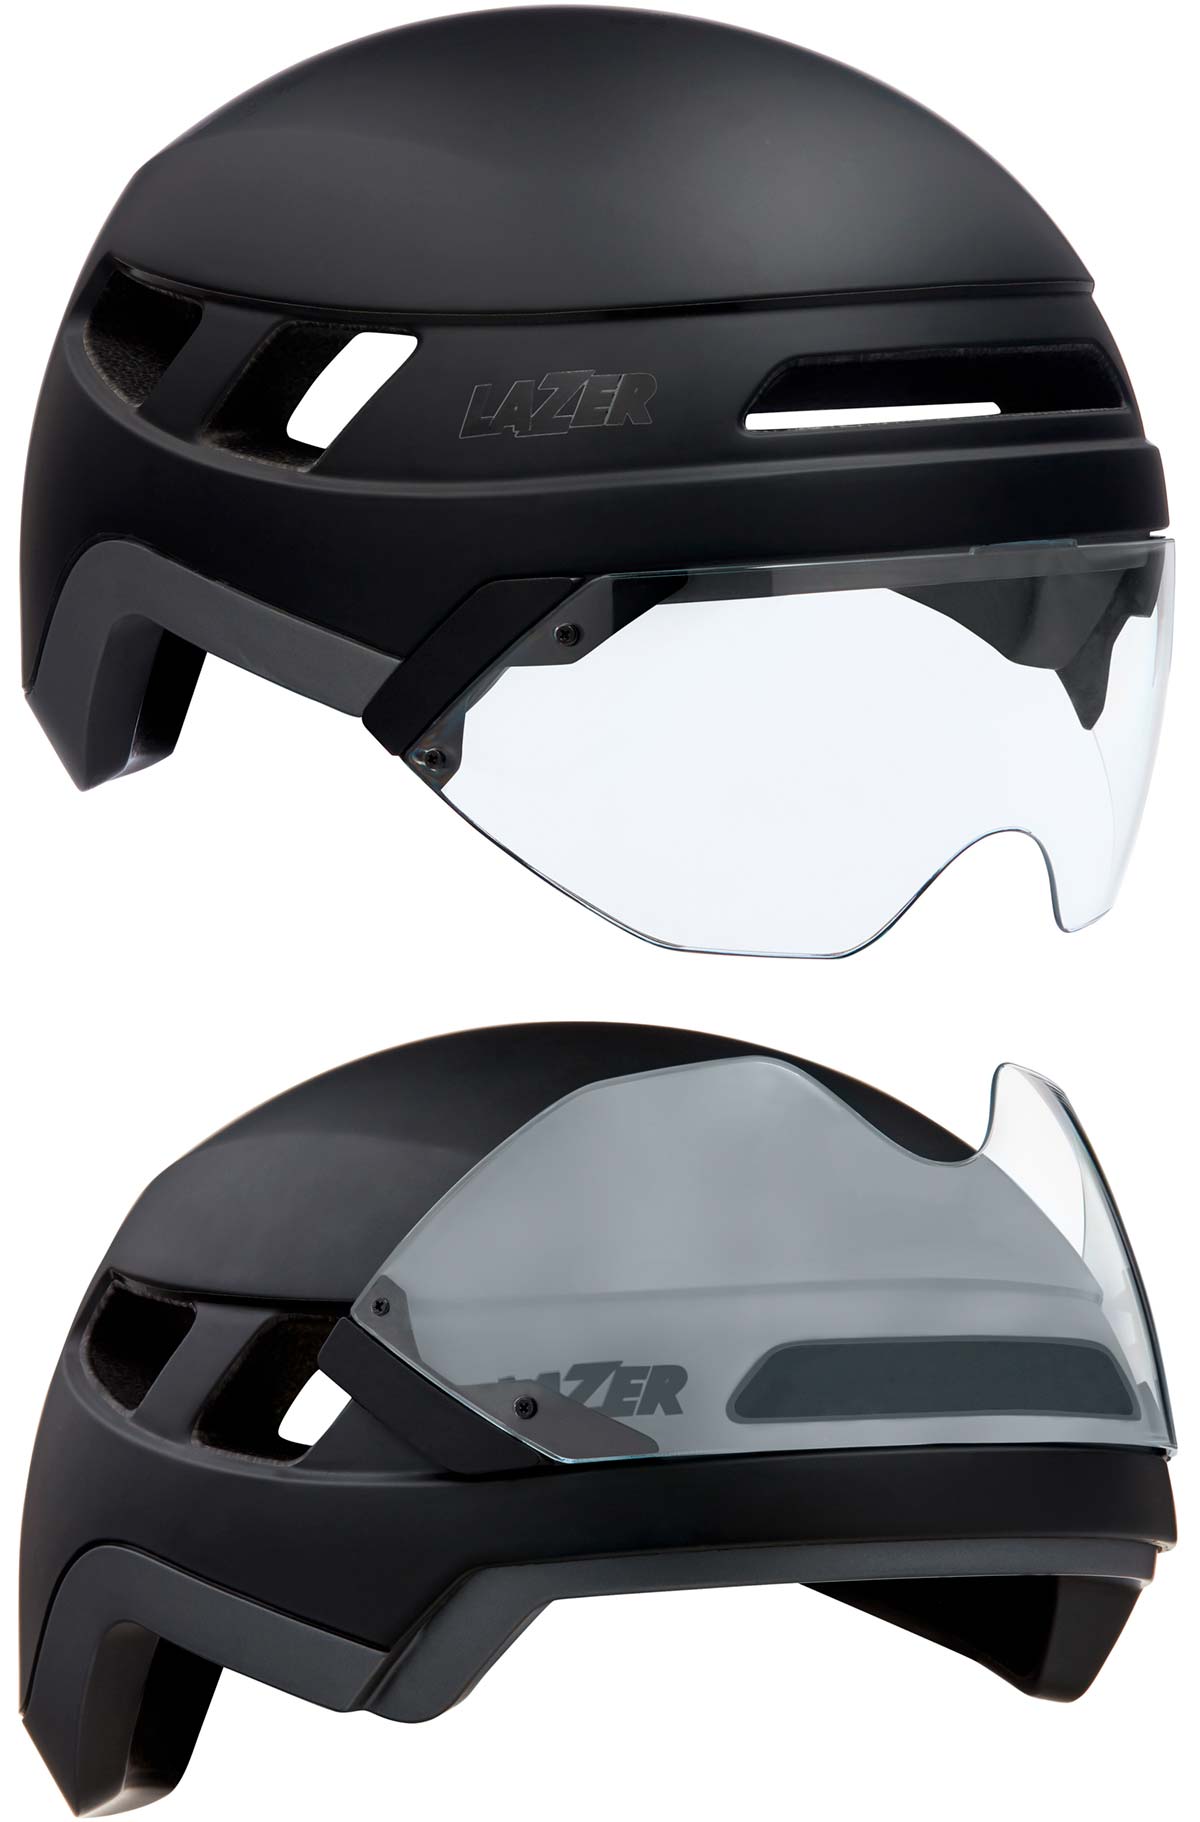 En TodoMountainBike: Lazer Urbanize, un casco con gafas integradas y luz LED trasera para ciclistas urbanos